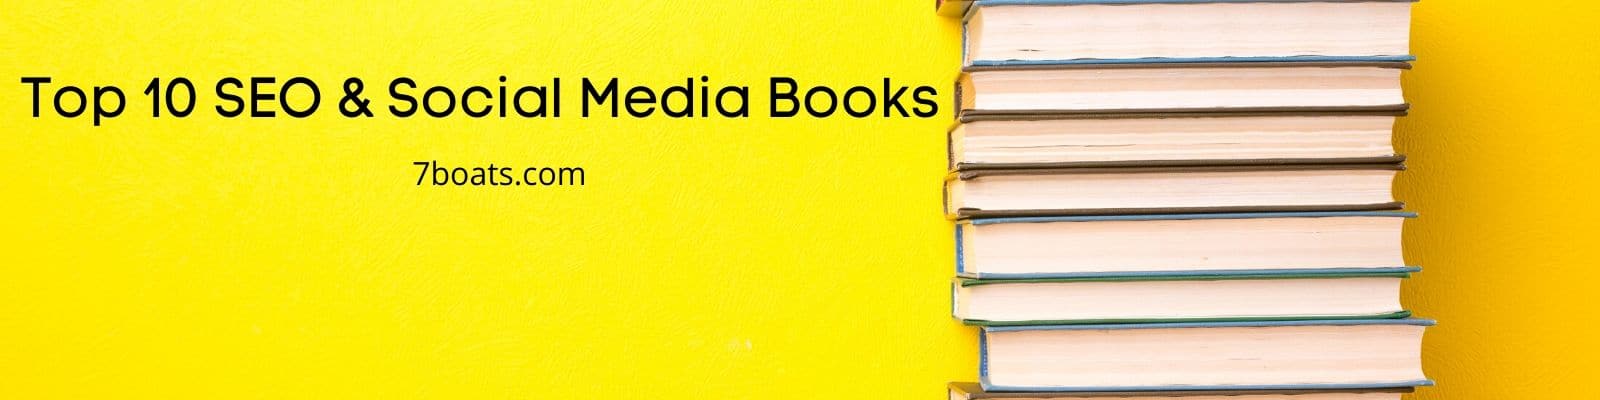 Top 10 SEO Books & Social Media Books Around – Best Books of SEO & Social Media